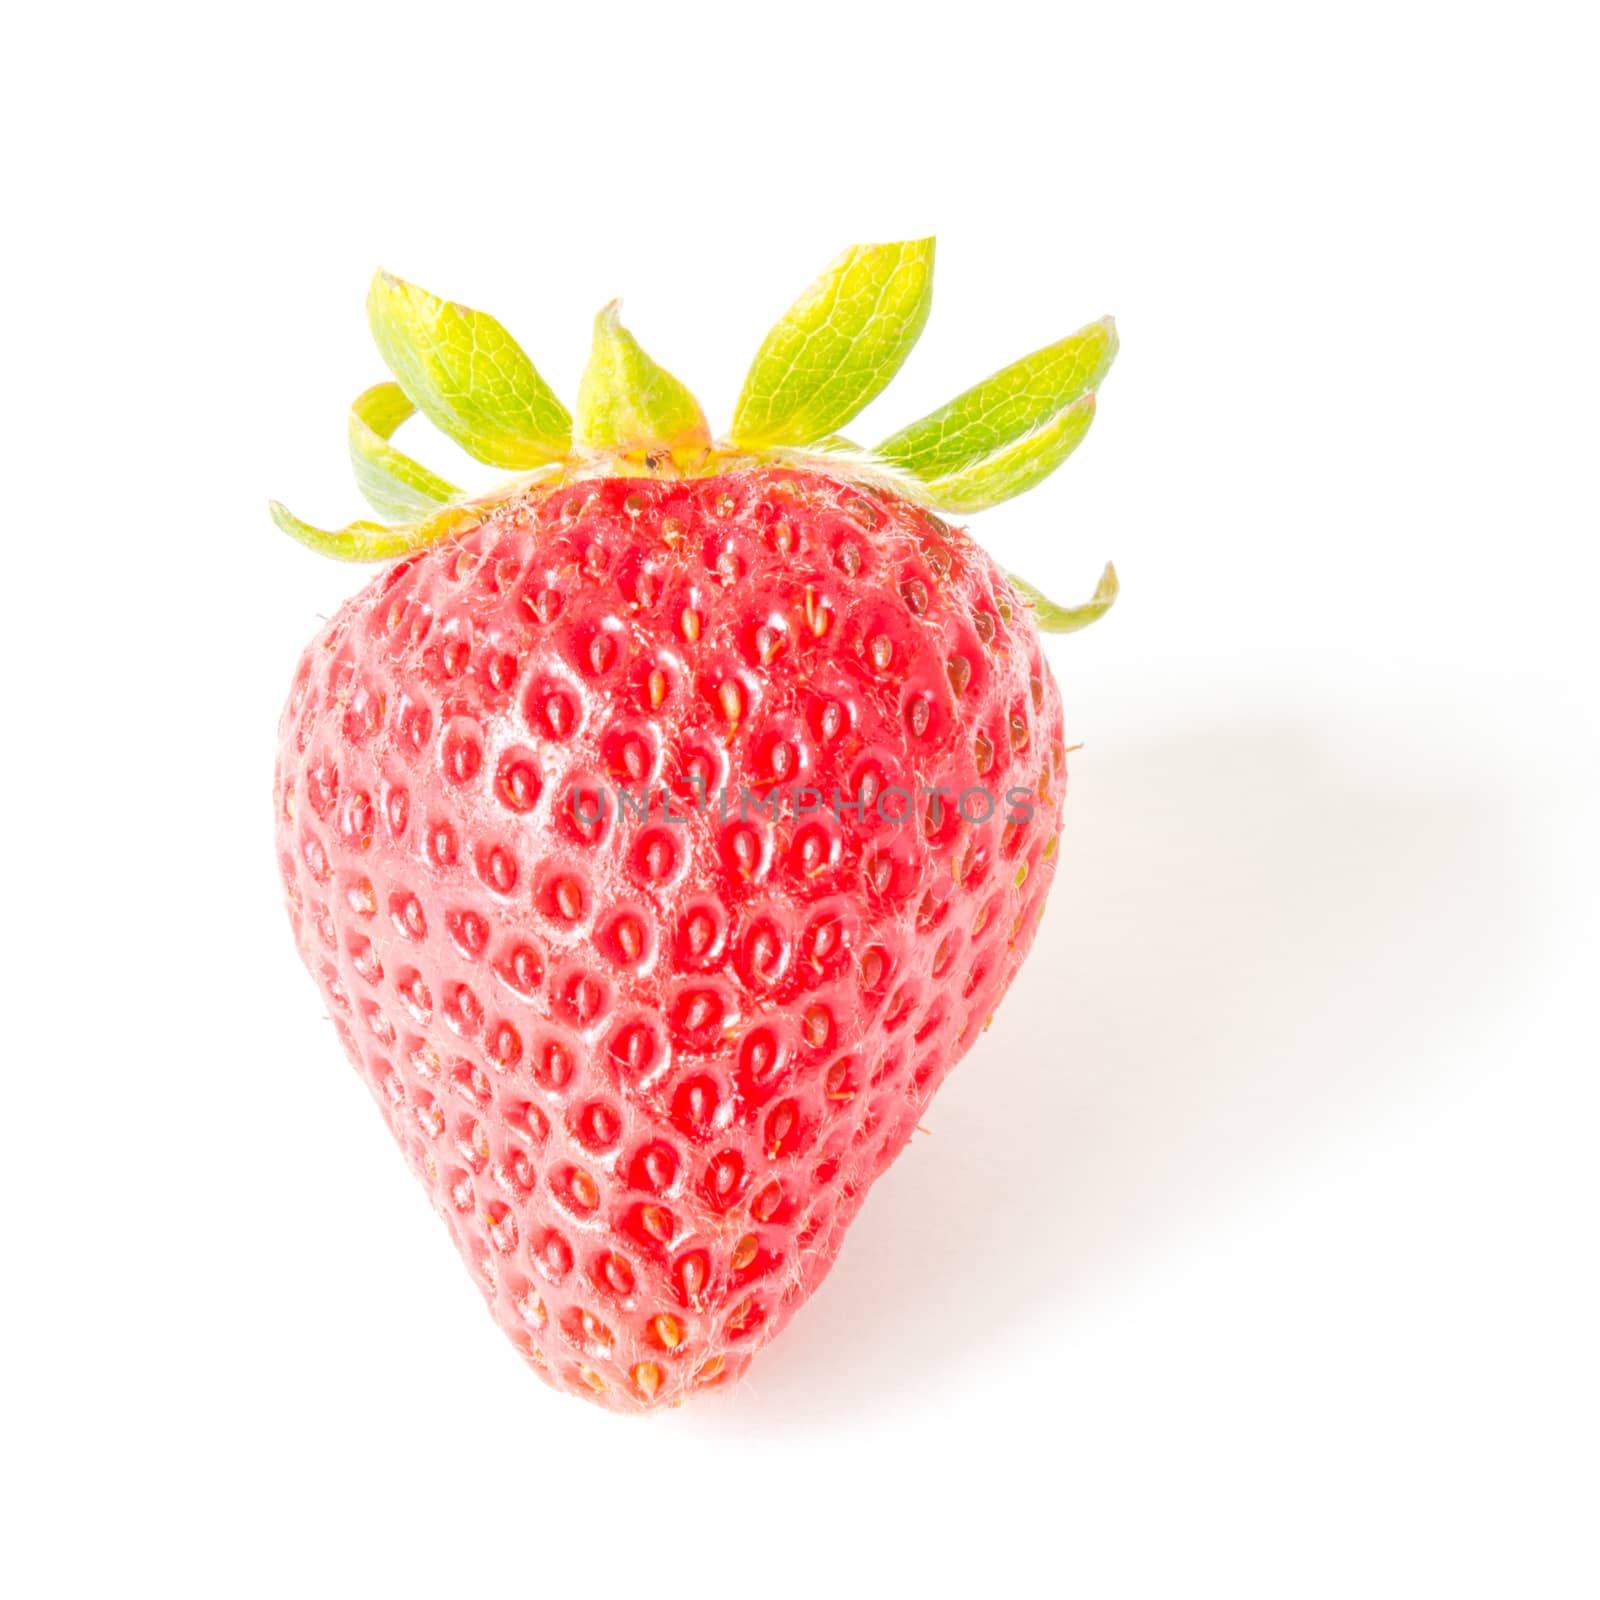 Studio shot one whole organic strawberry isolated on white by trongnguyen